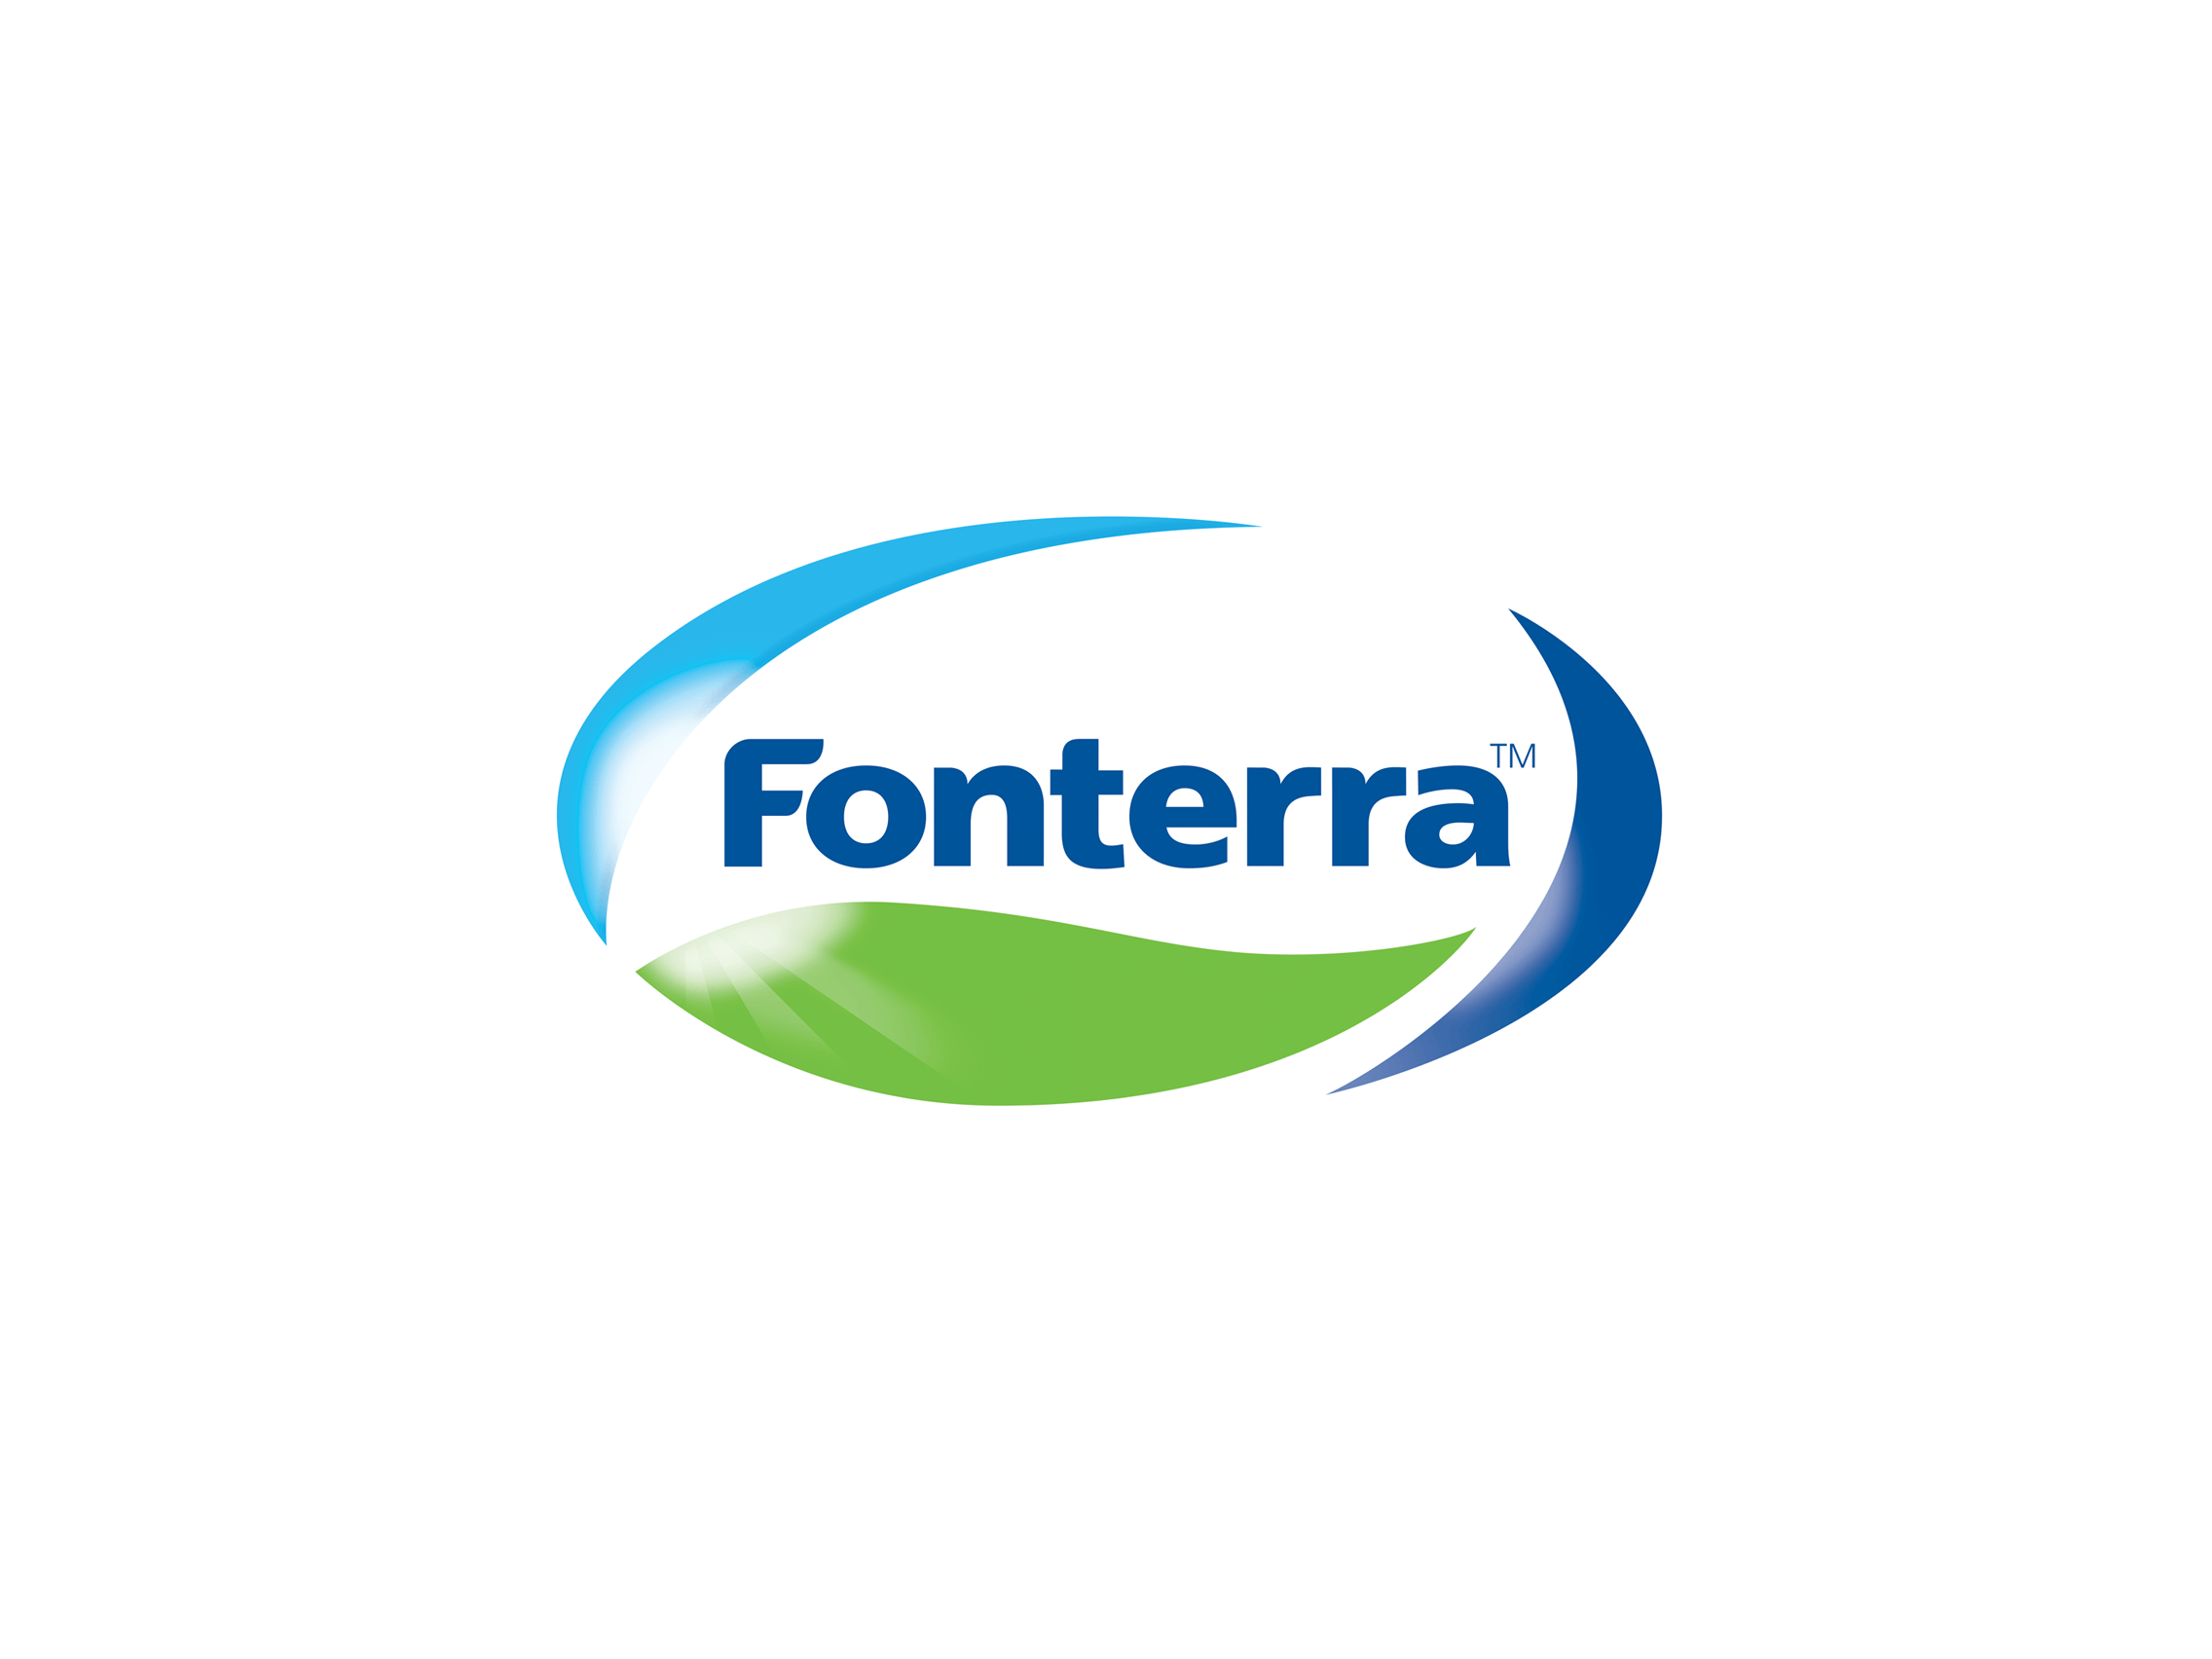 Fonterra Logo - Logo Fonterra PNG Transparent Logo Fonterra.PNG Images. | PlusPNG